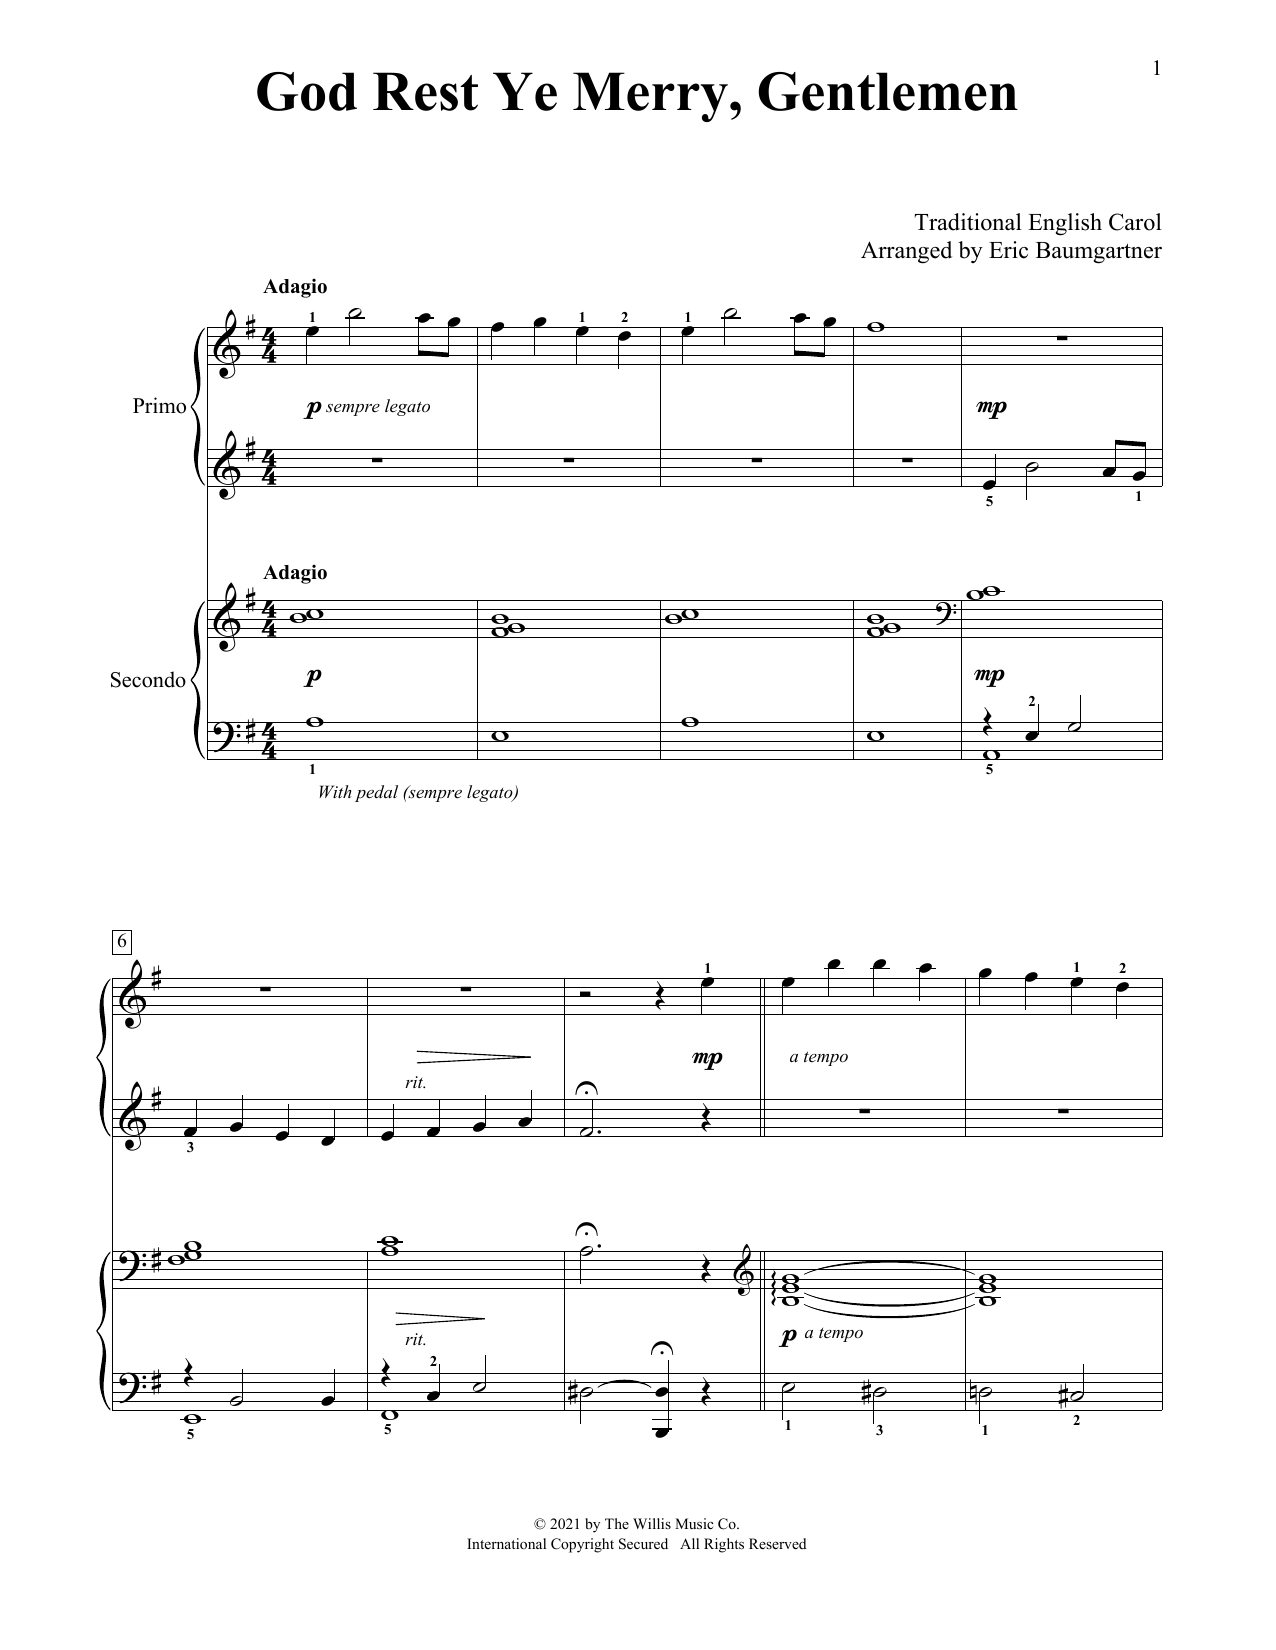 Traditional English Carol God Rest Ye Merry, Gentlemen (arr. Eric Baumgartner) Sheet Music Notes & Chords for Piano Duet - Download or Print PDF